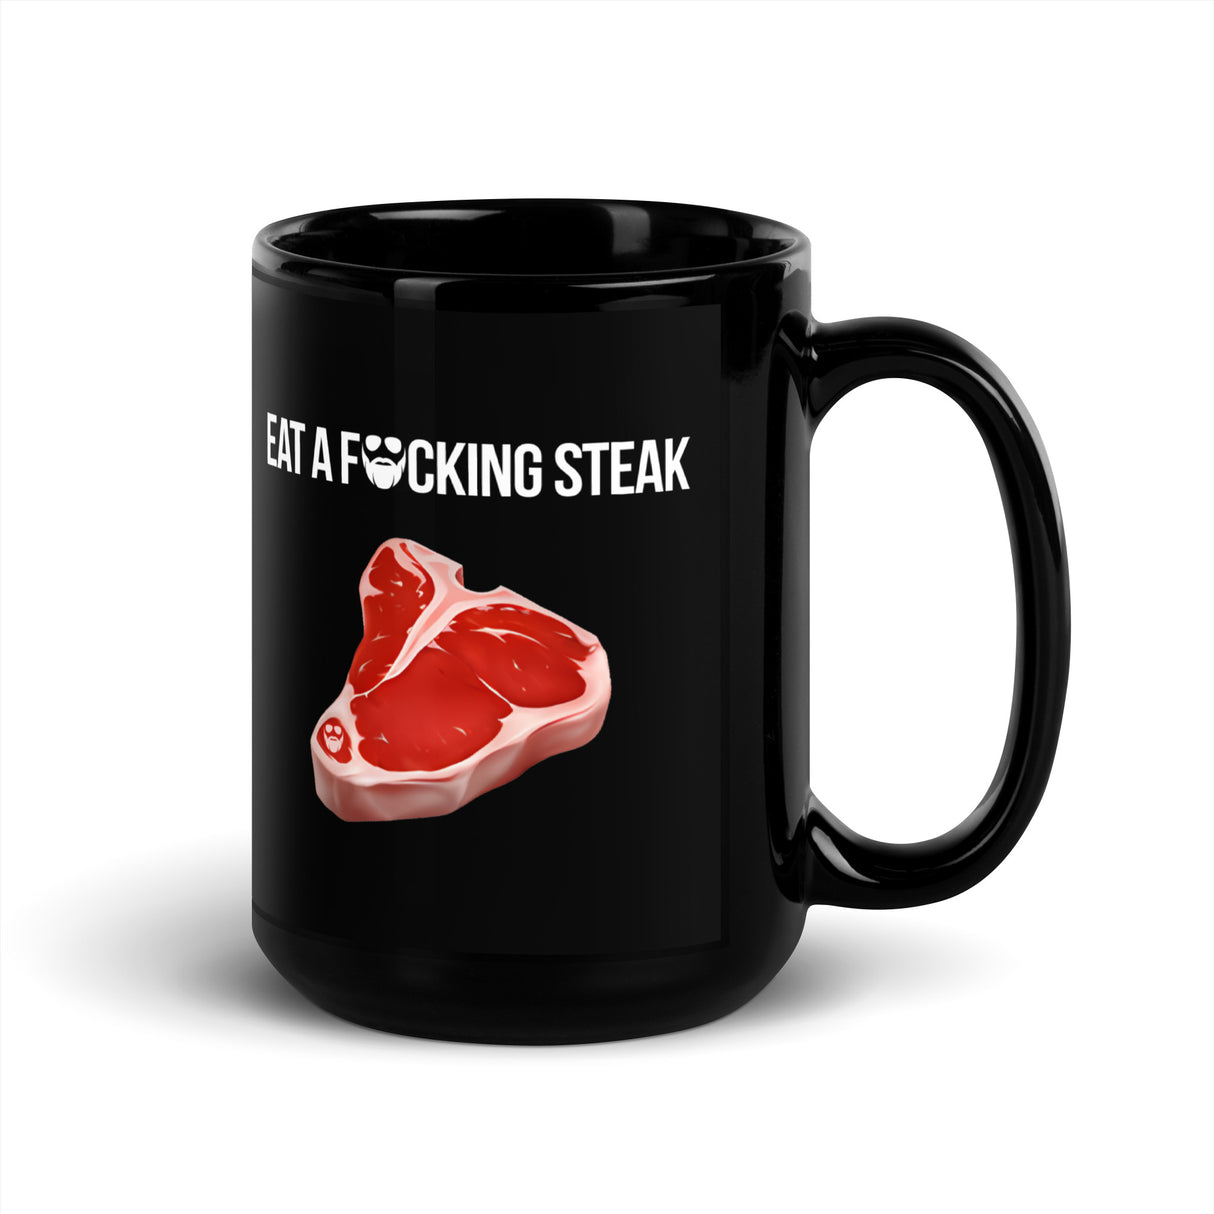 Eat a F*cking Steak Mug